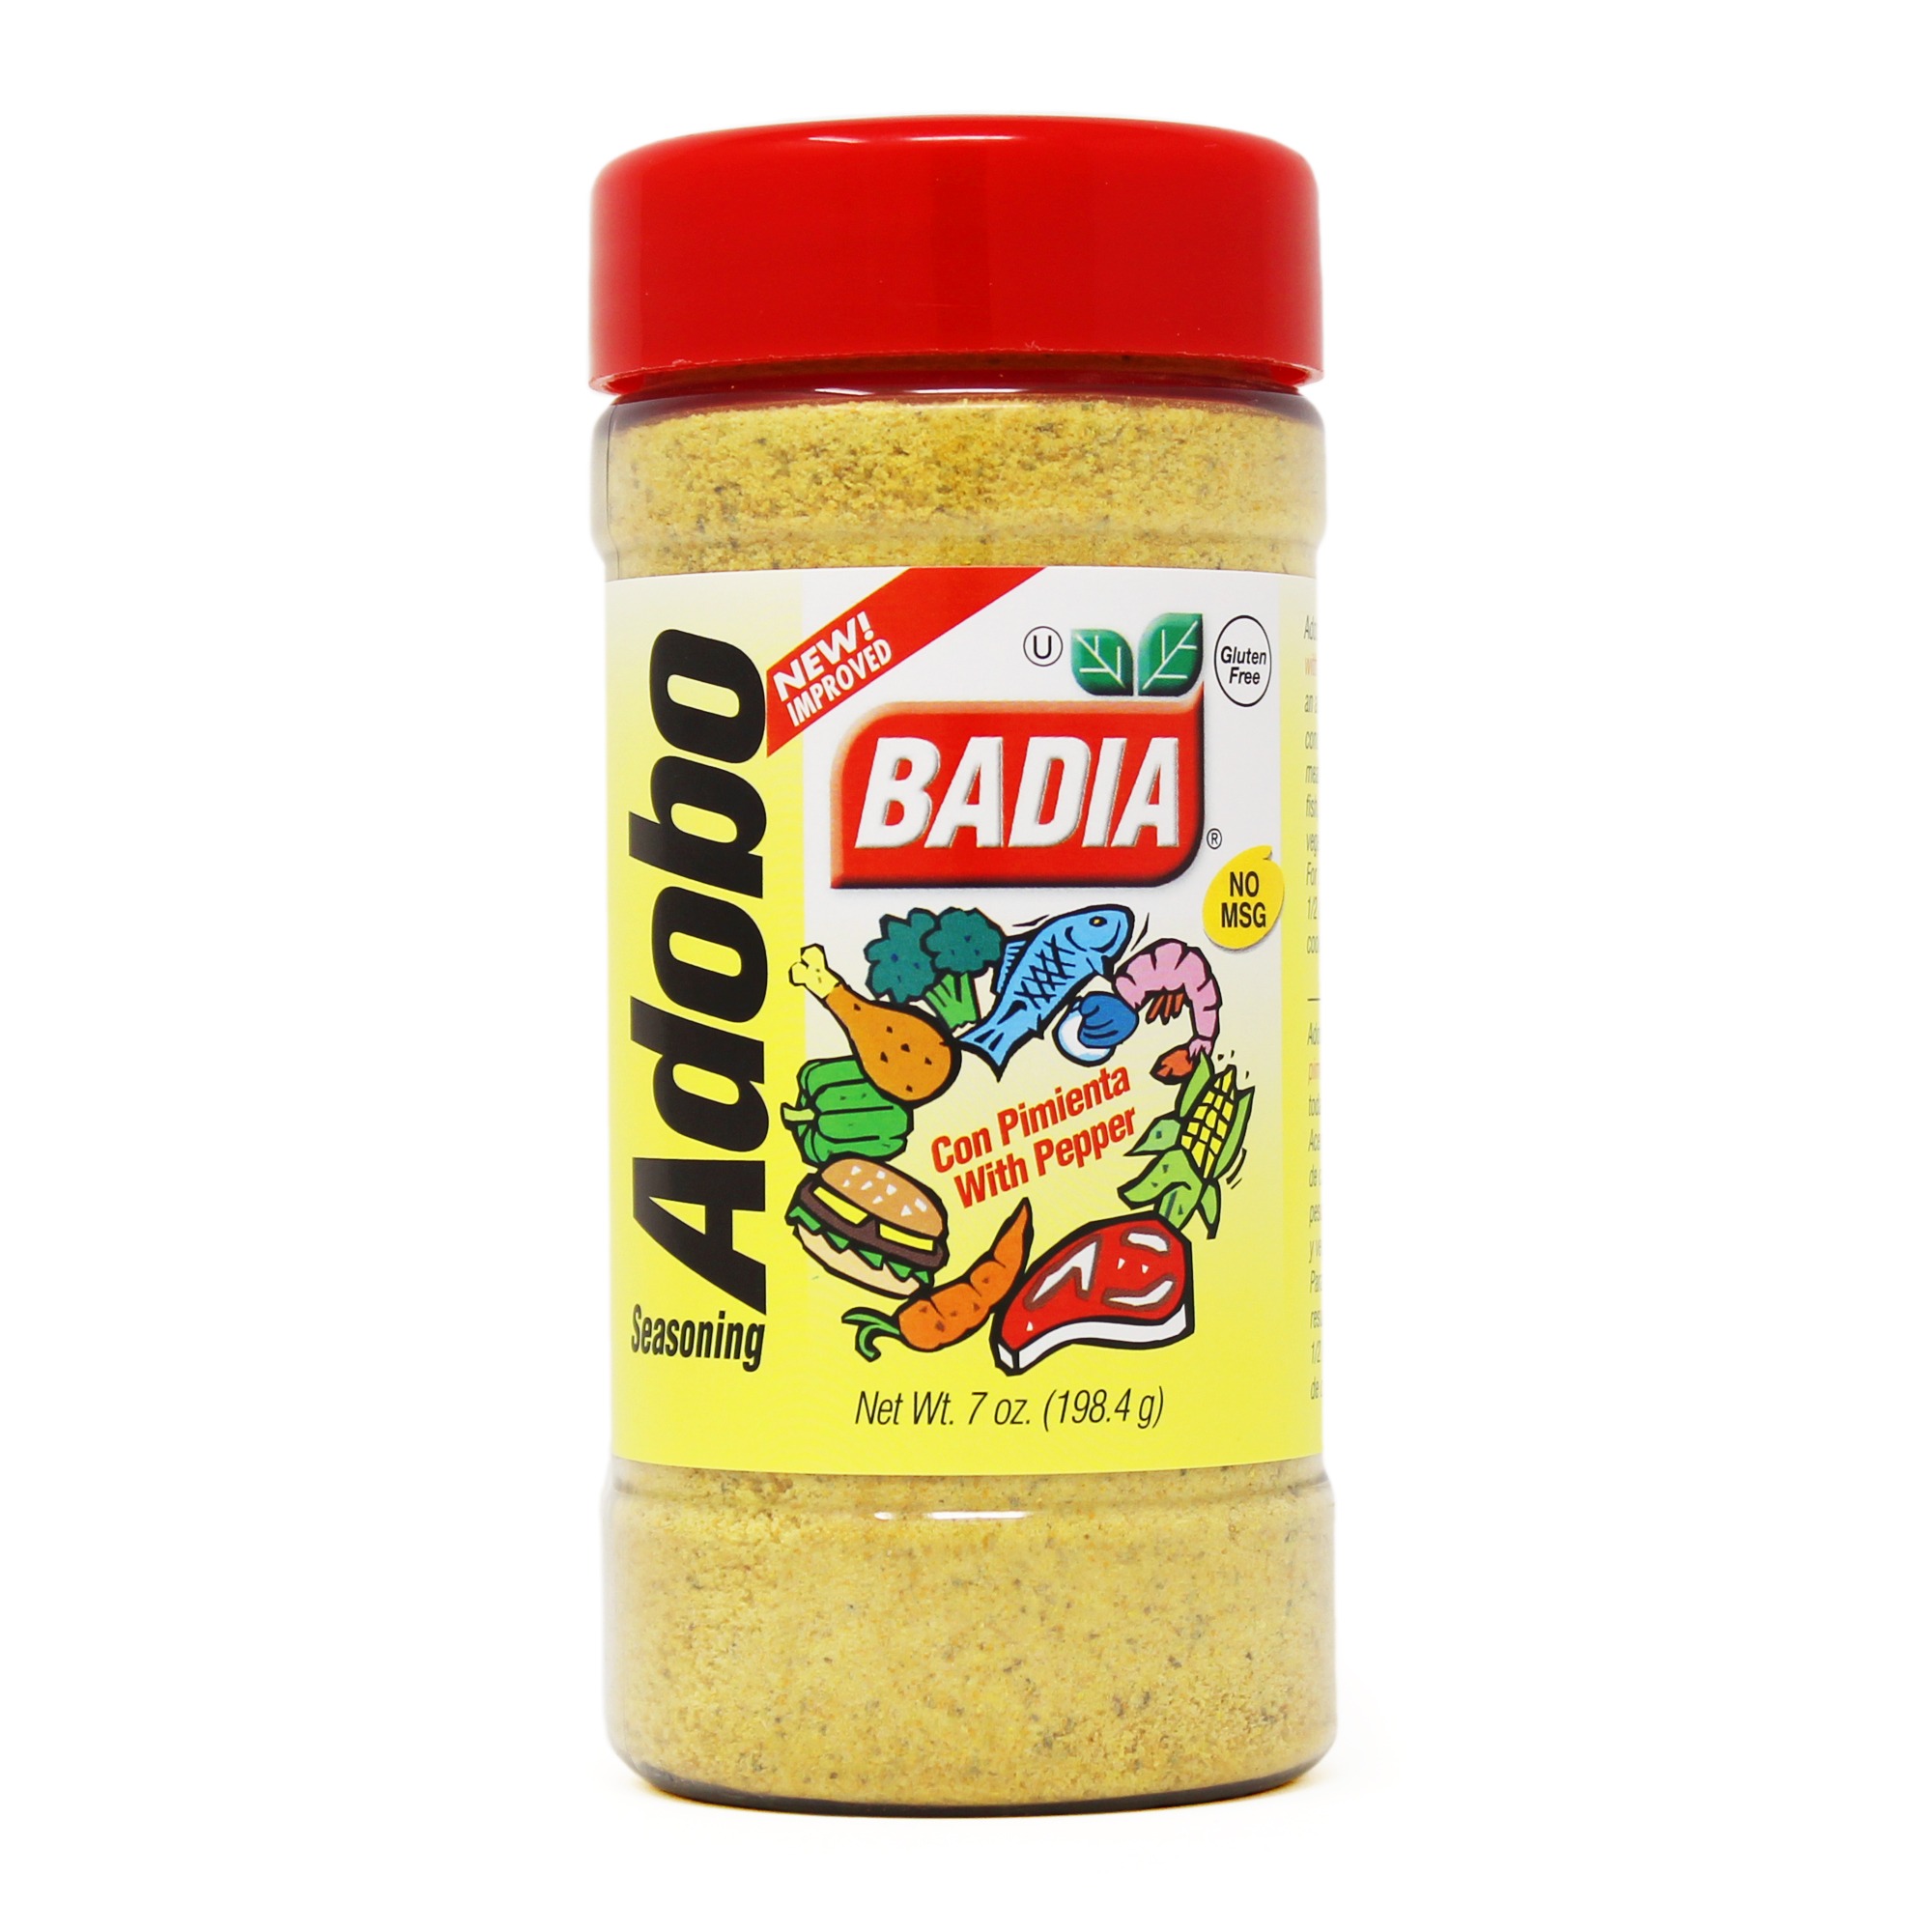 Jollof Rice Seasoning - 5.75 oz - Badia Spices